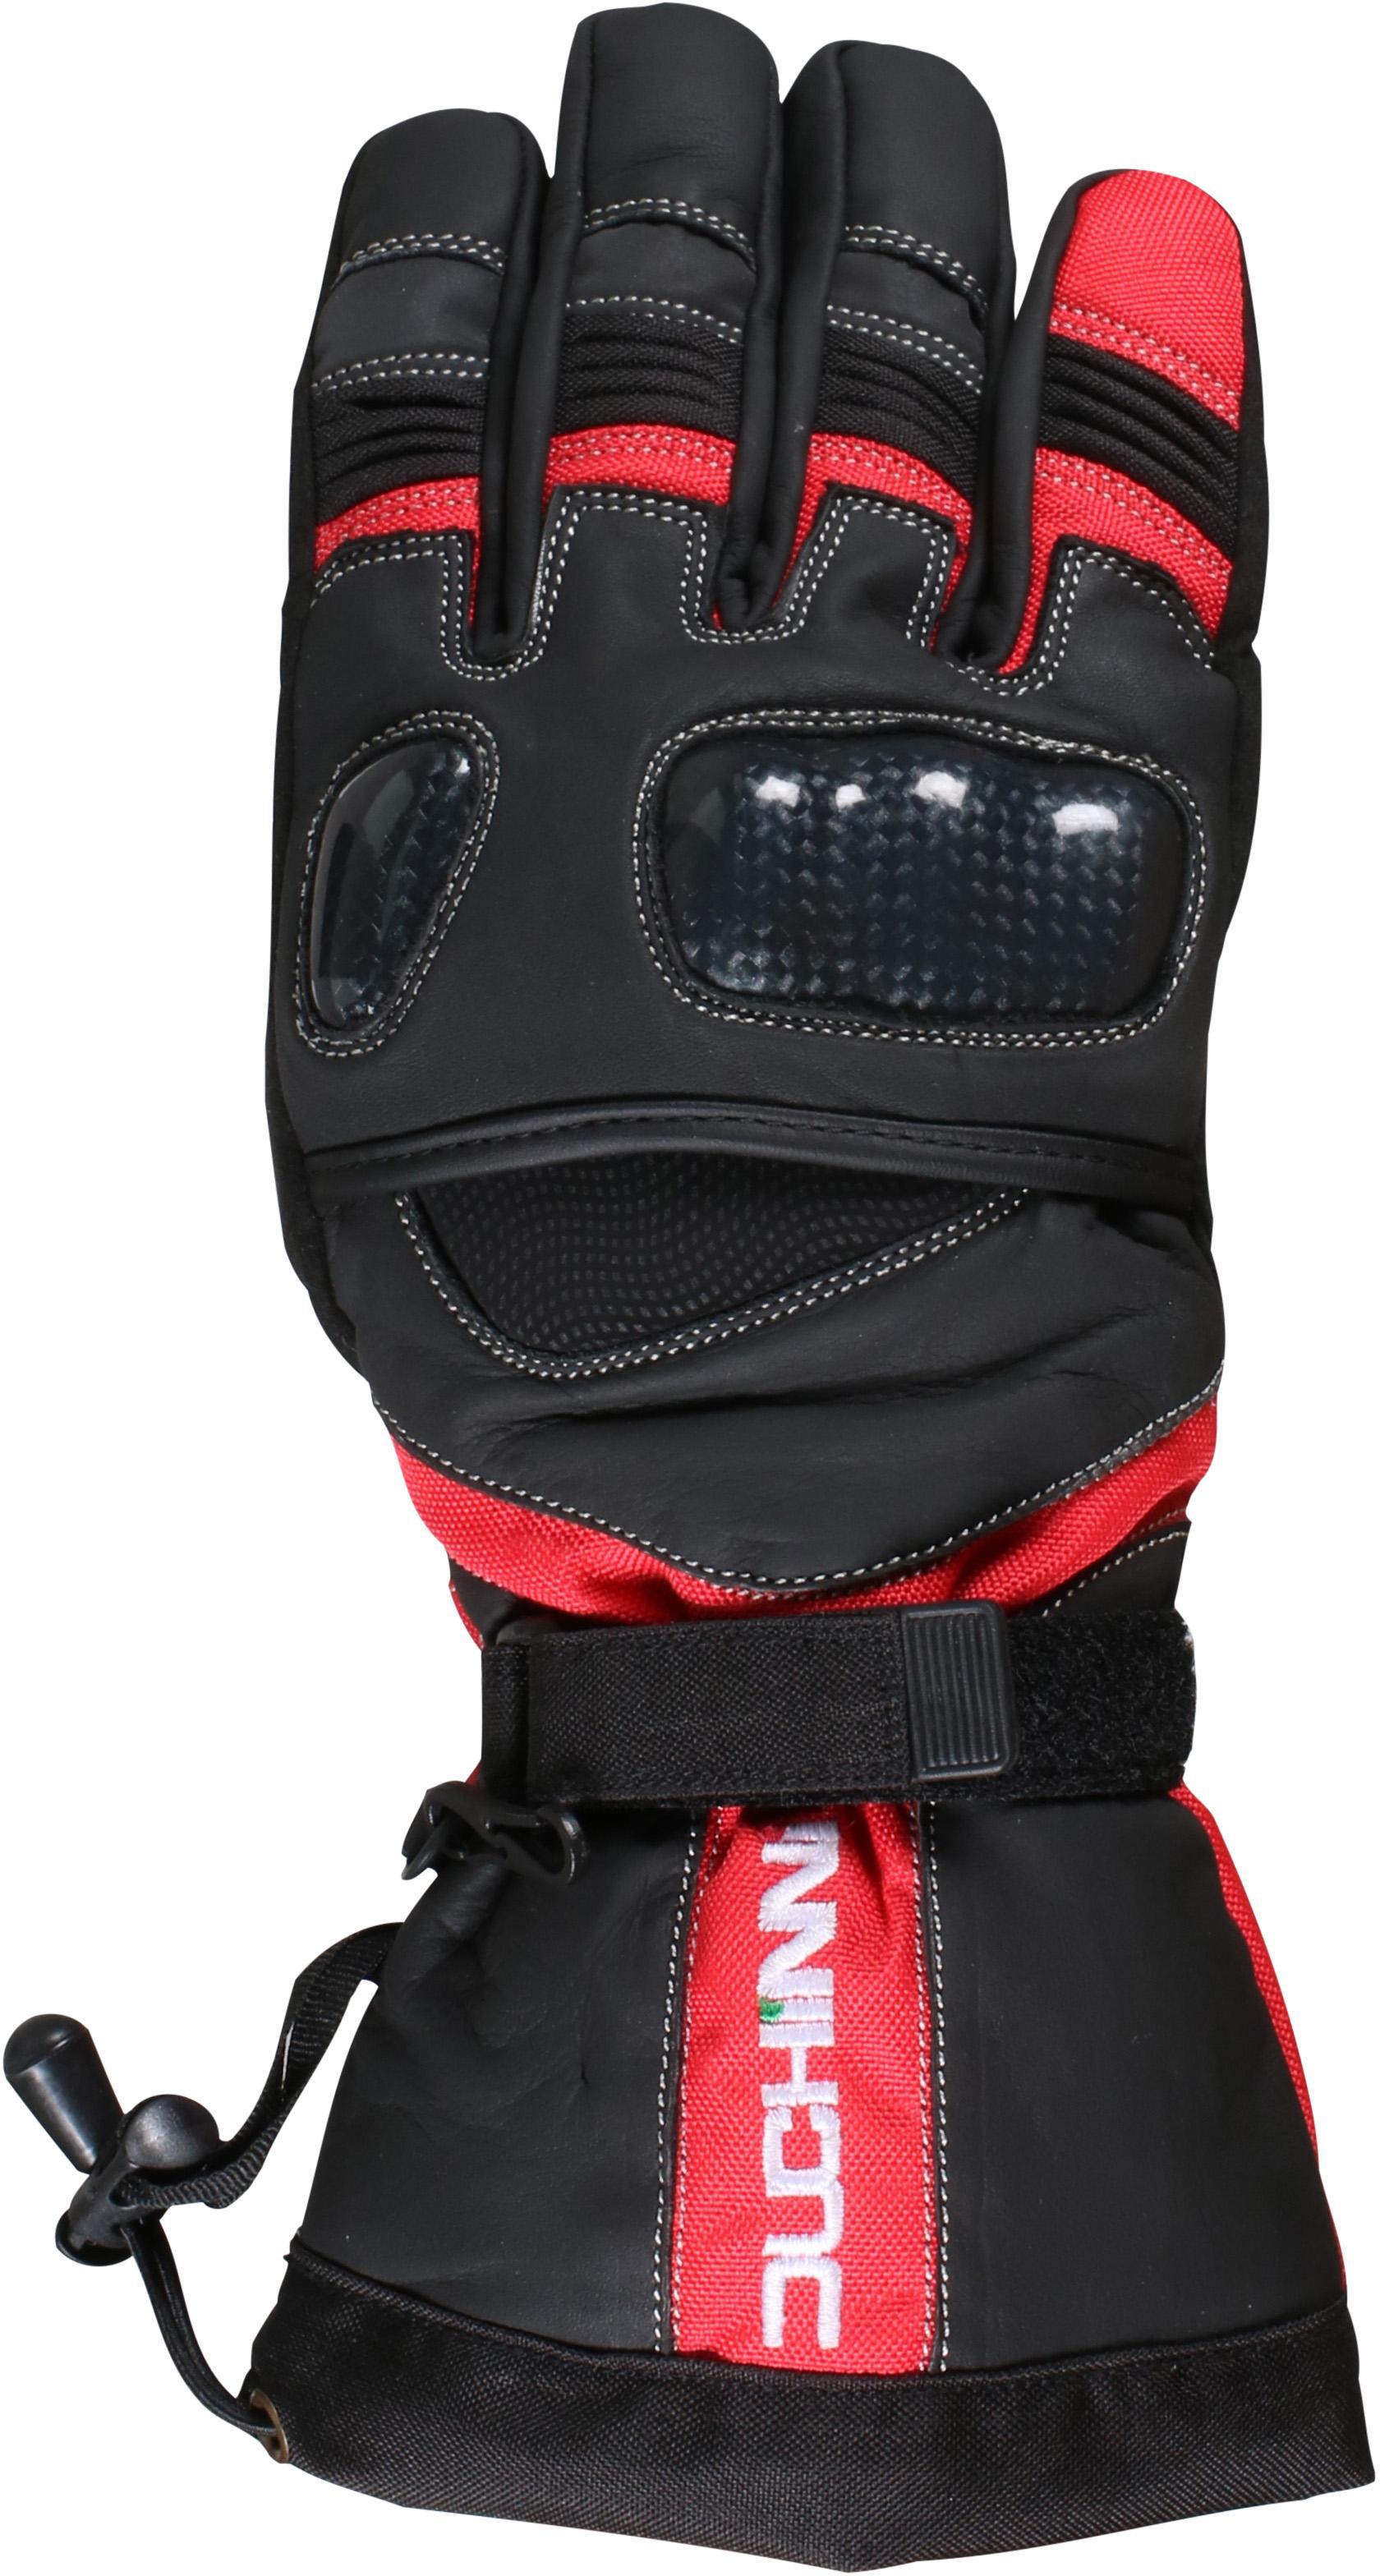 Duchinni Yukon Motorcycle Gloves - Black And Red, M